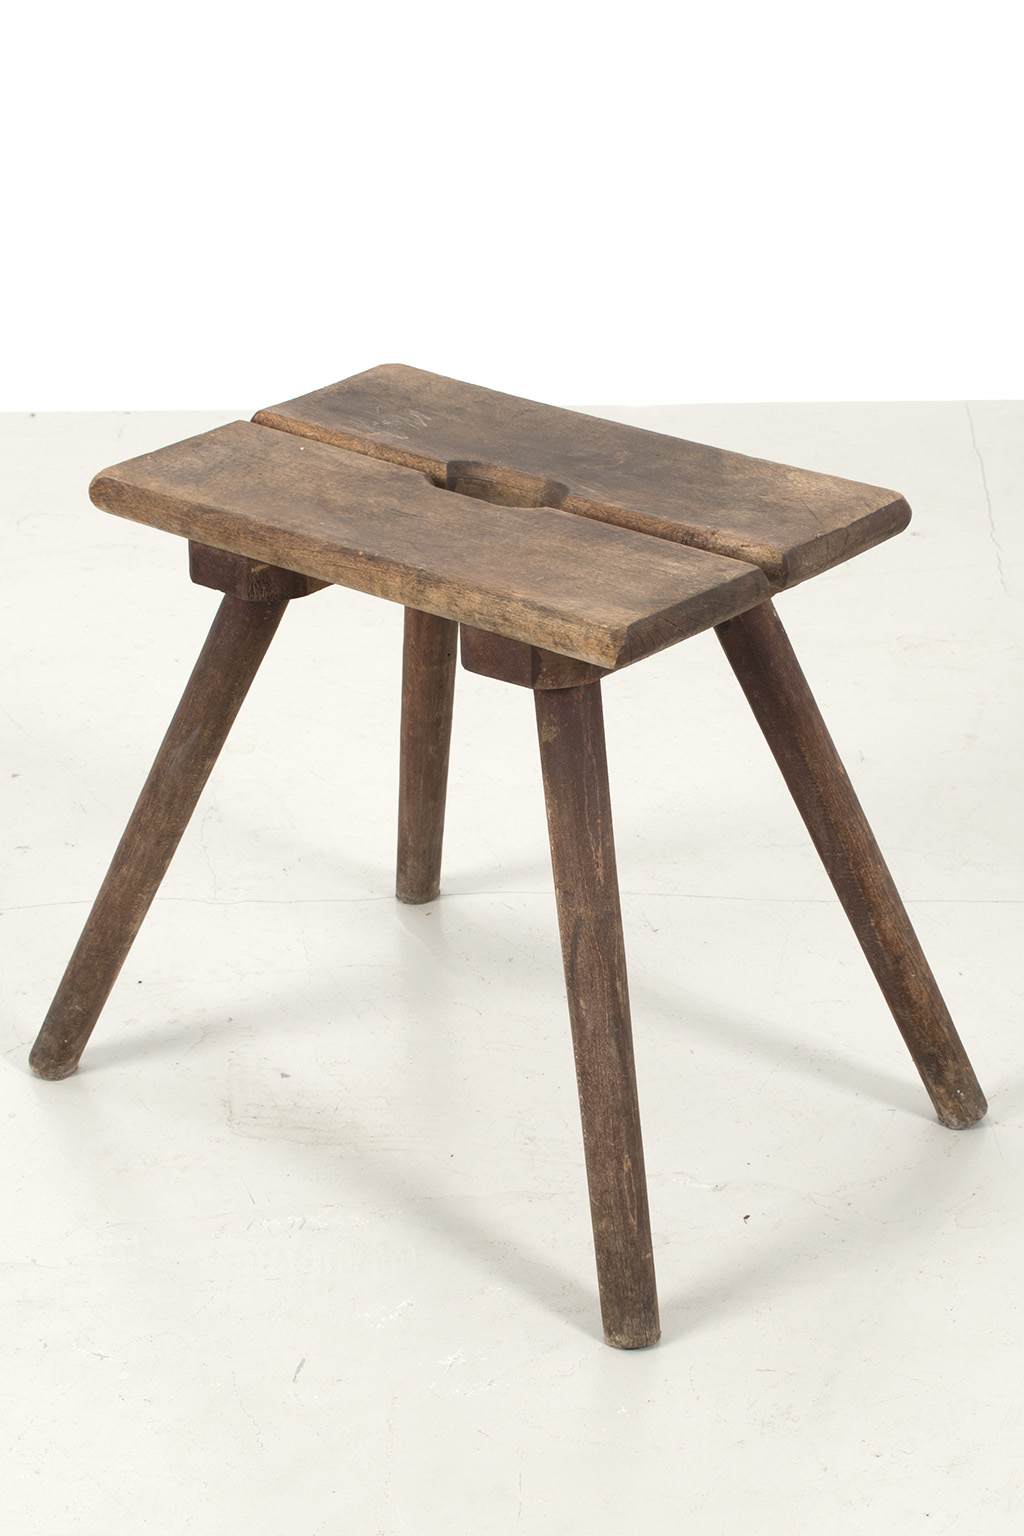 Industrial stool built to last